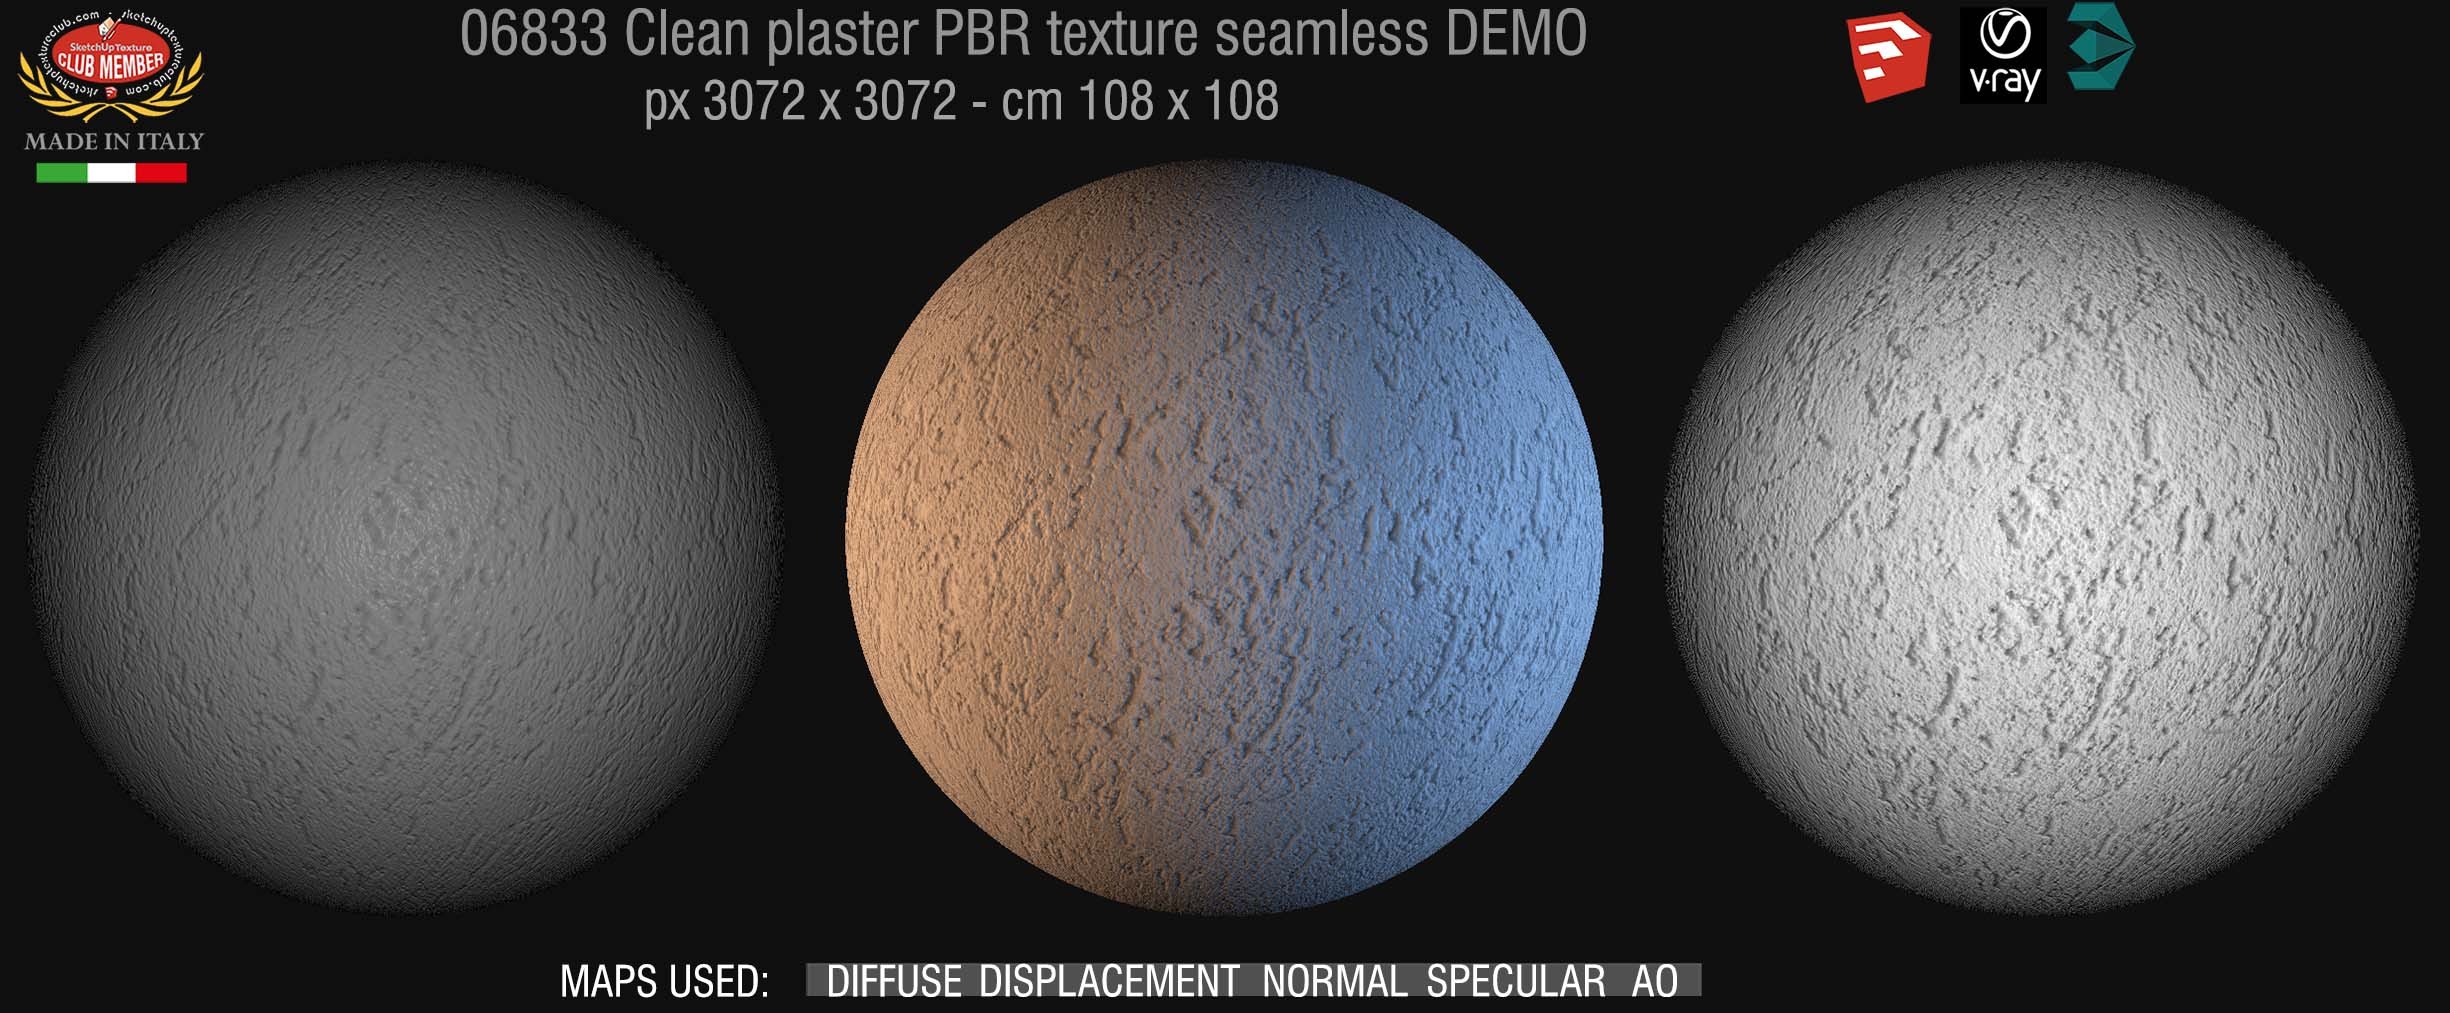 06833 clean plaster PBR texture seamless DEMO